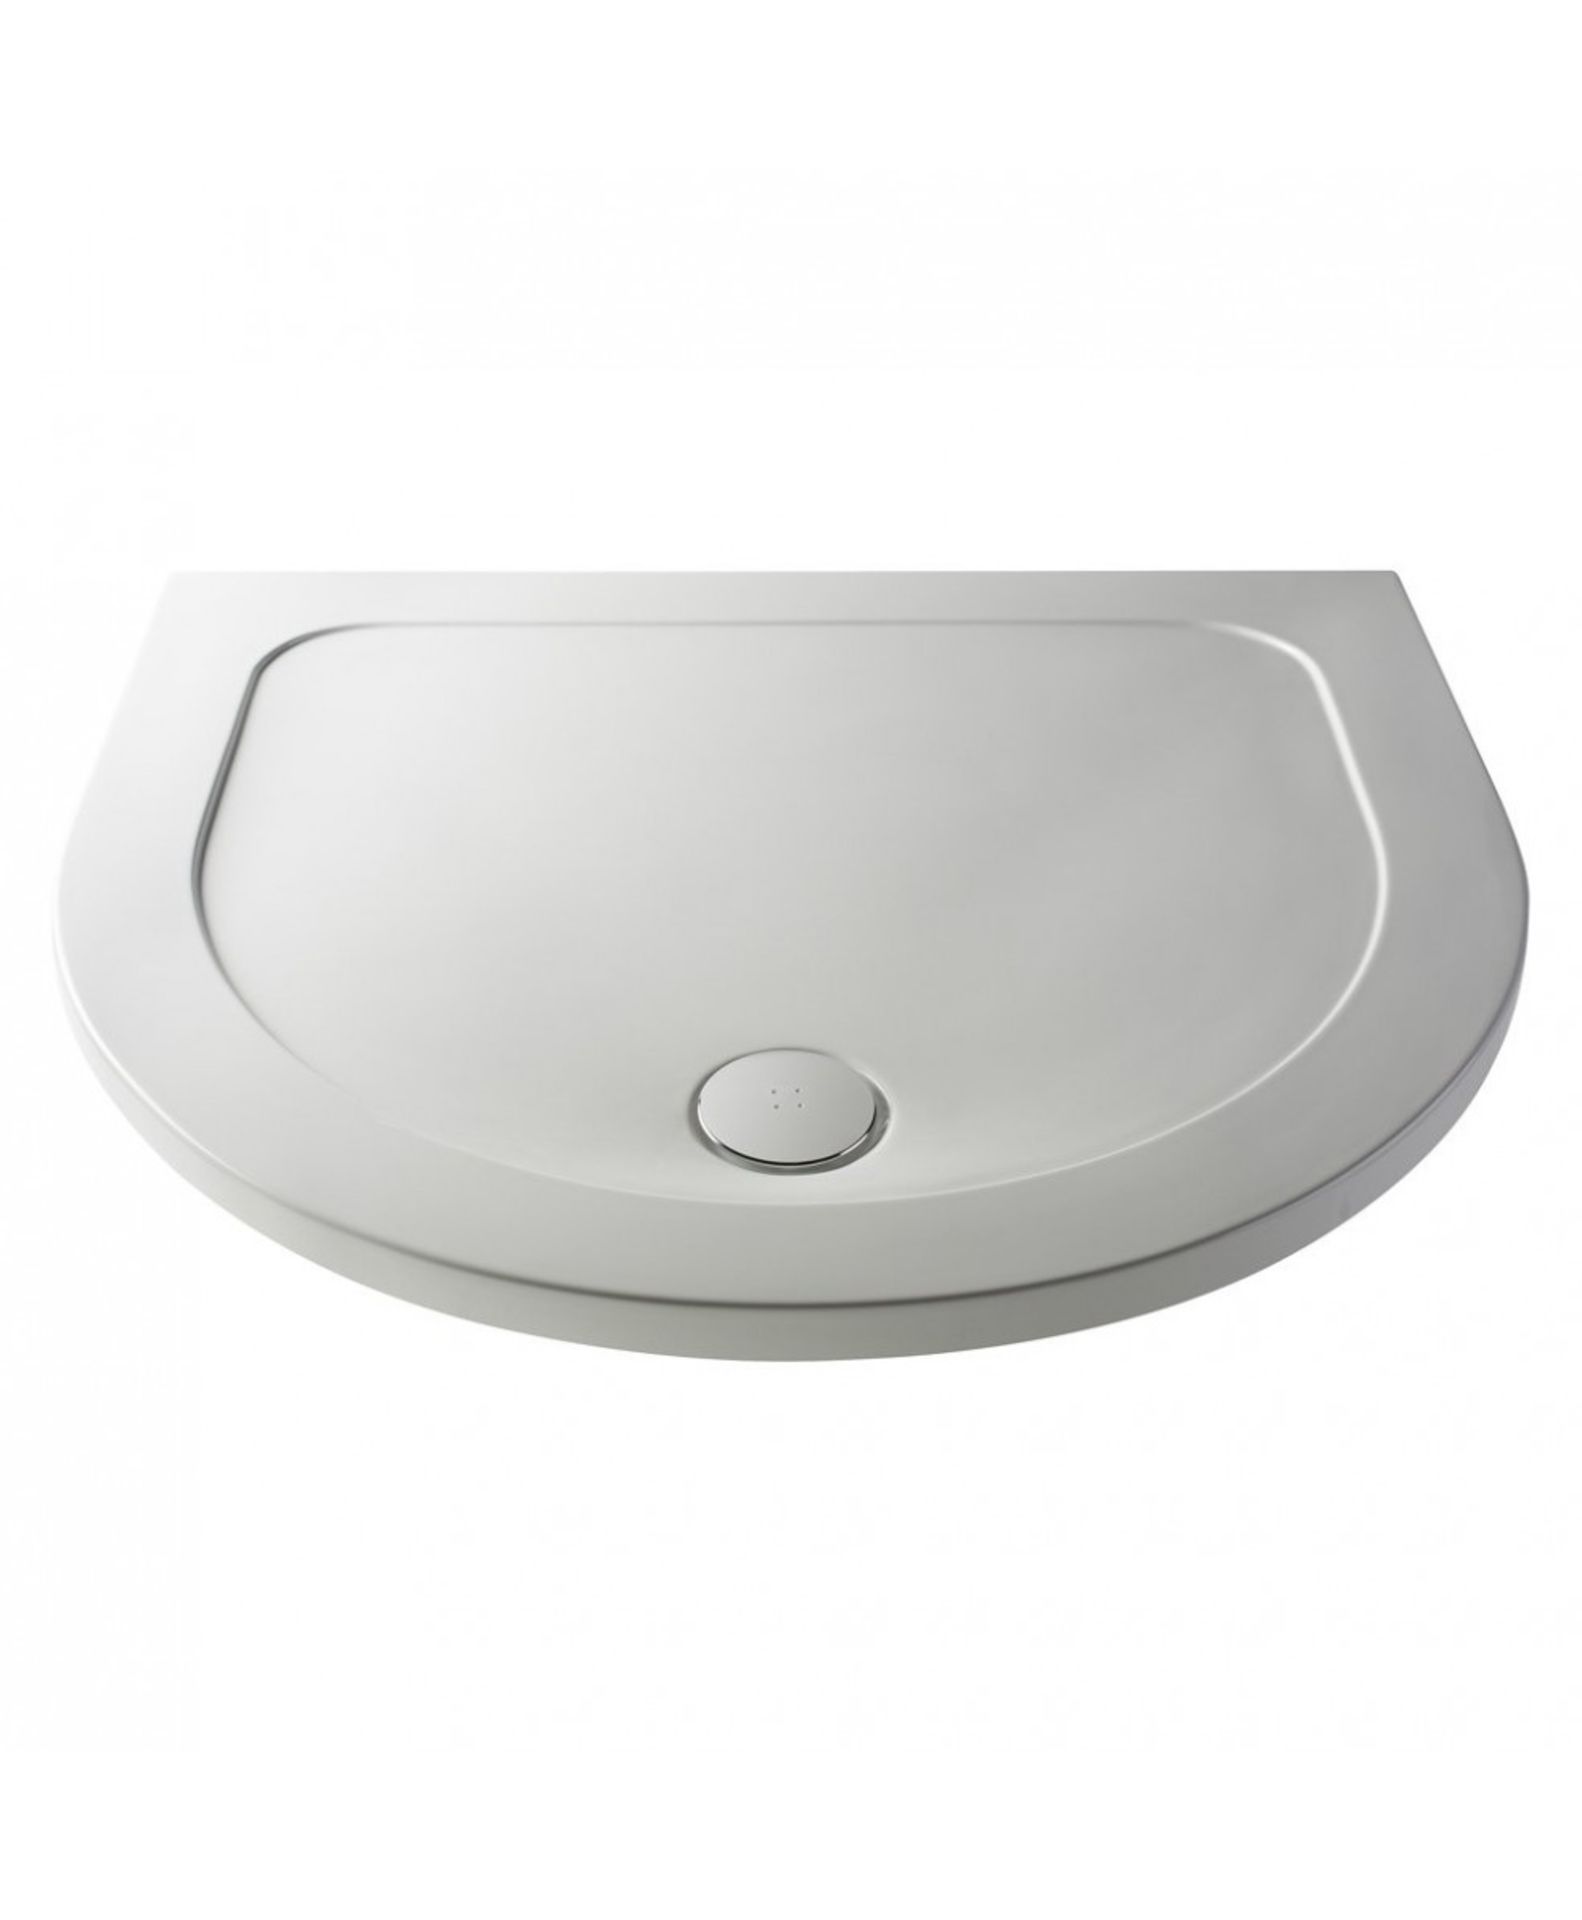 (PC129) Twyfords 770mm Hydro D Shape White Shower tray.Low profile ultra slim design Gel co...